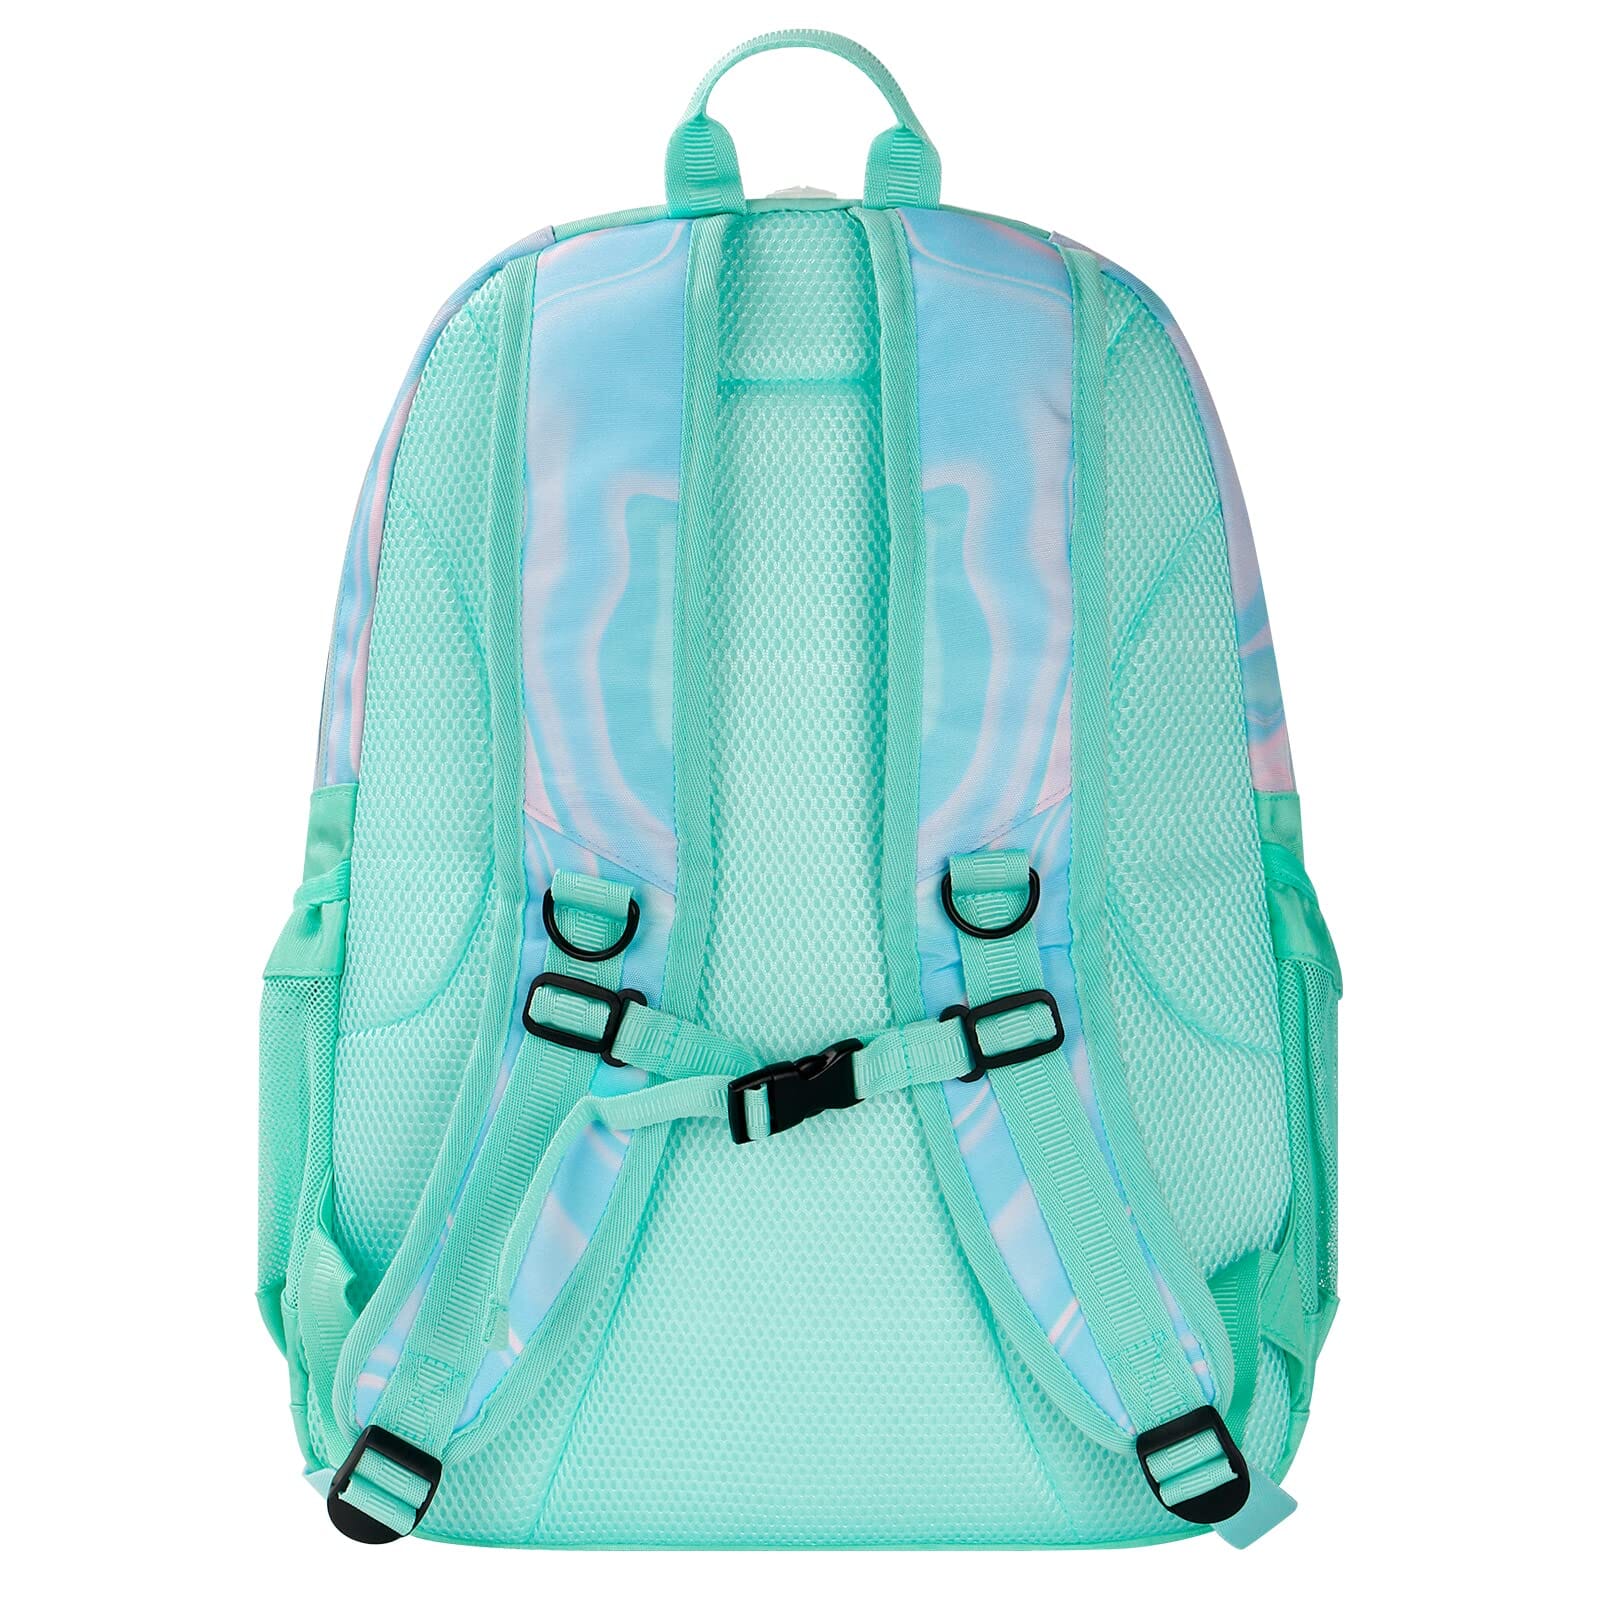 Choco Mocha Teal Backpack for Teen Girls, Travel School Backpack for Girls Middle School Large Bookbag 18 Inch, Green chocomochakids 